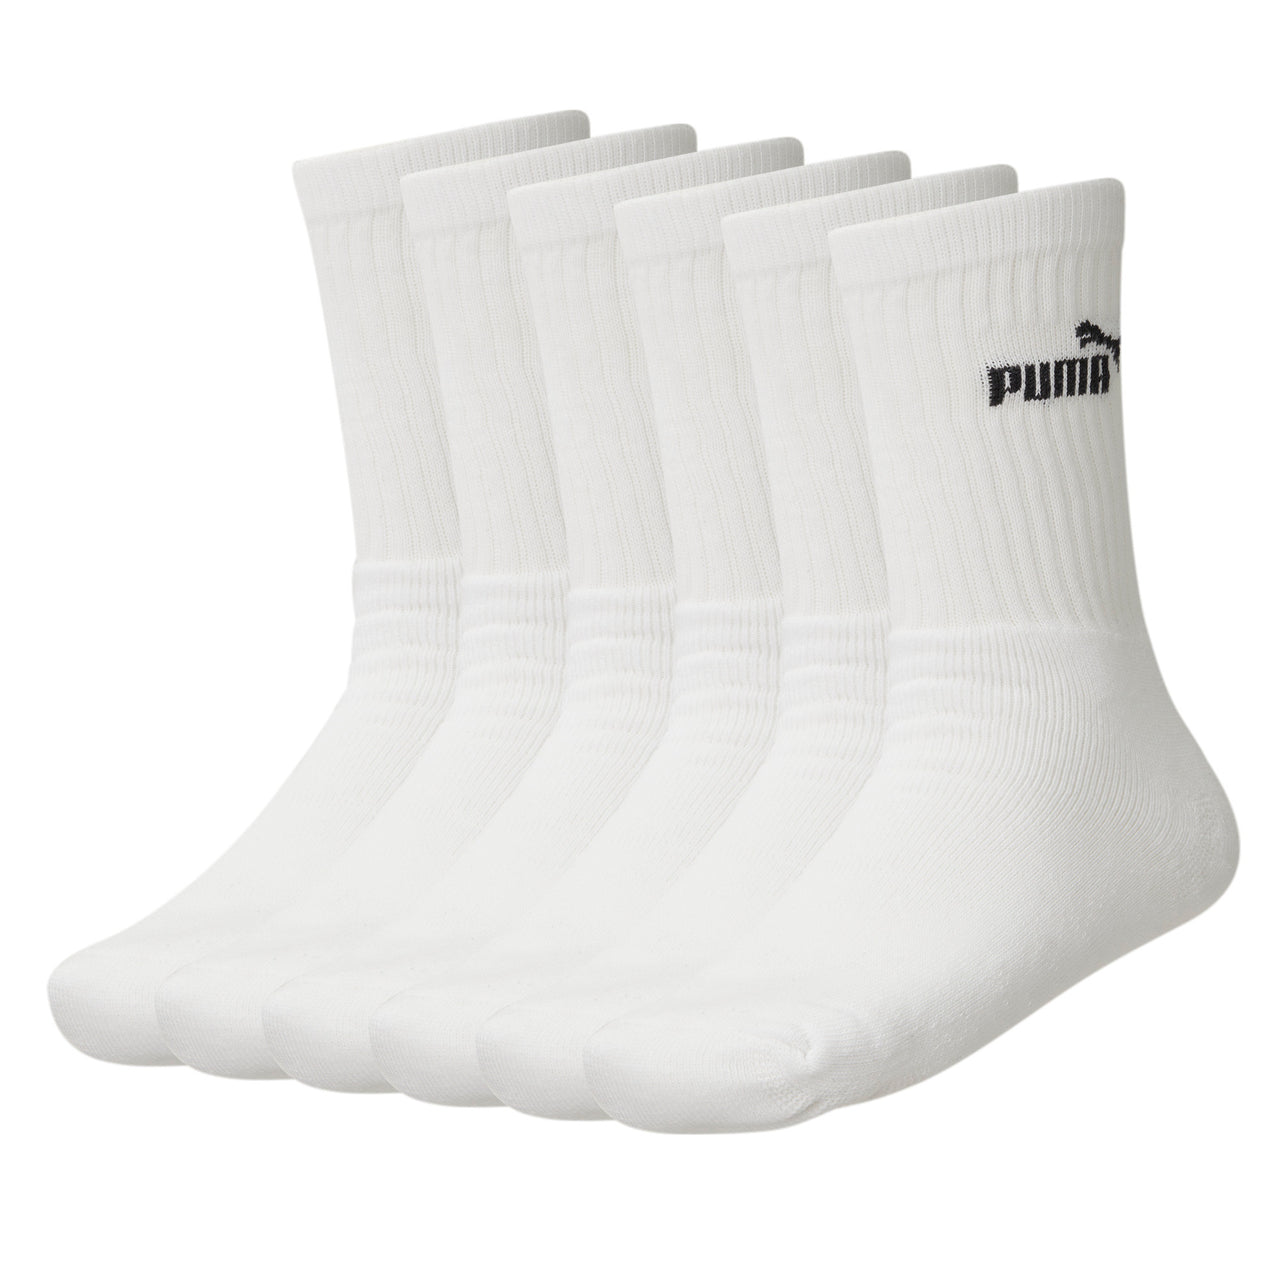 6pk Puma crew socks